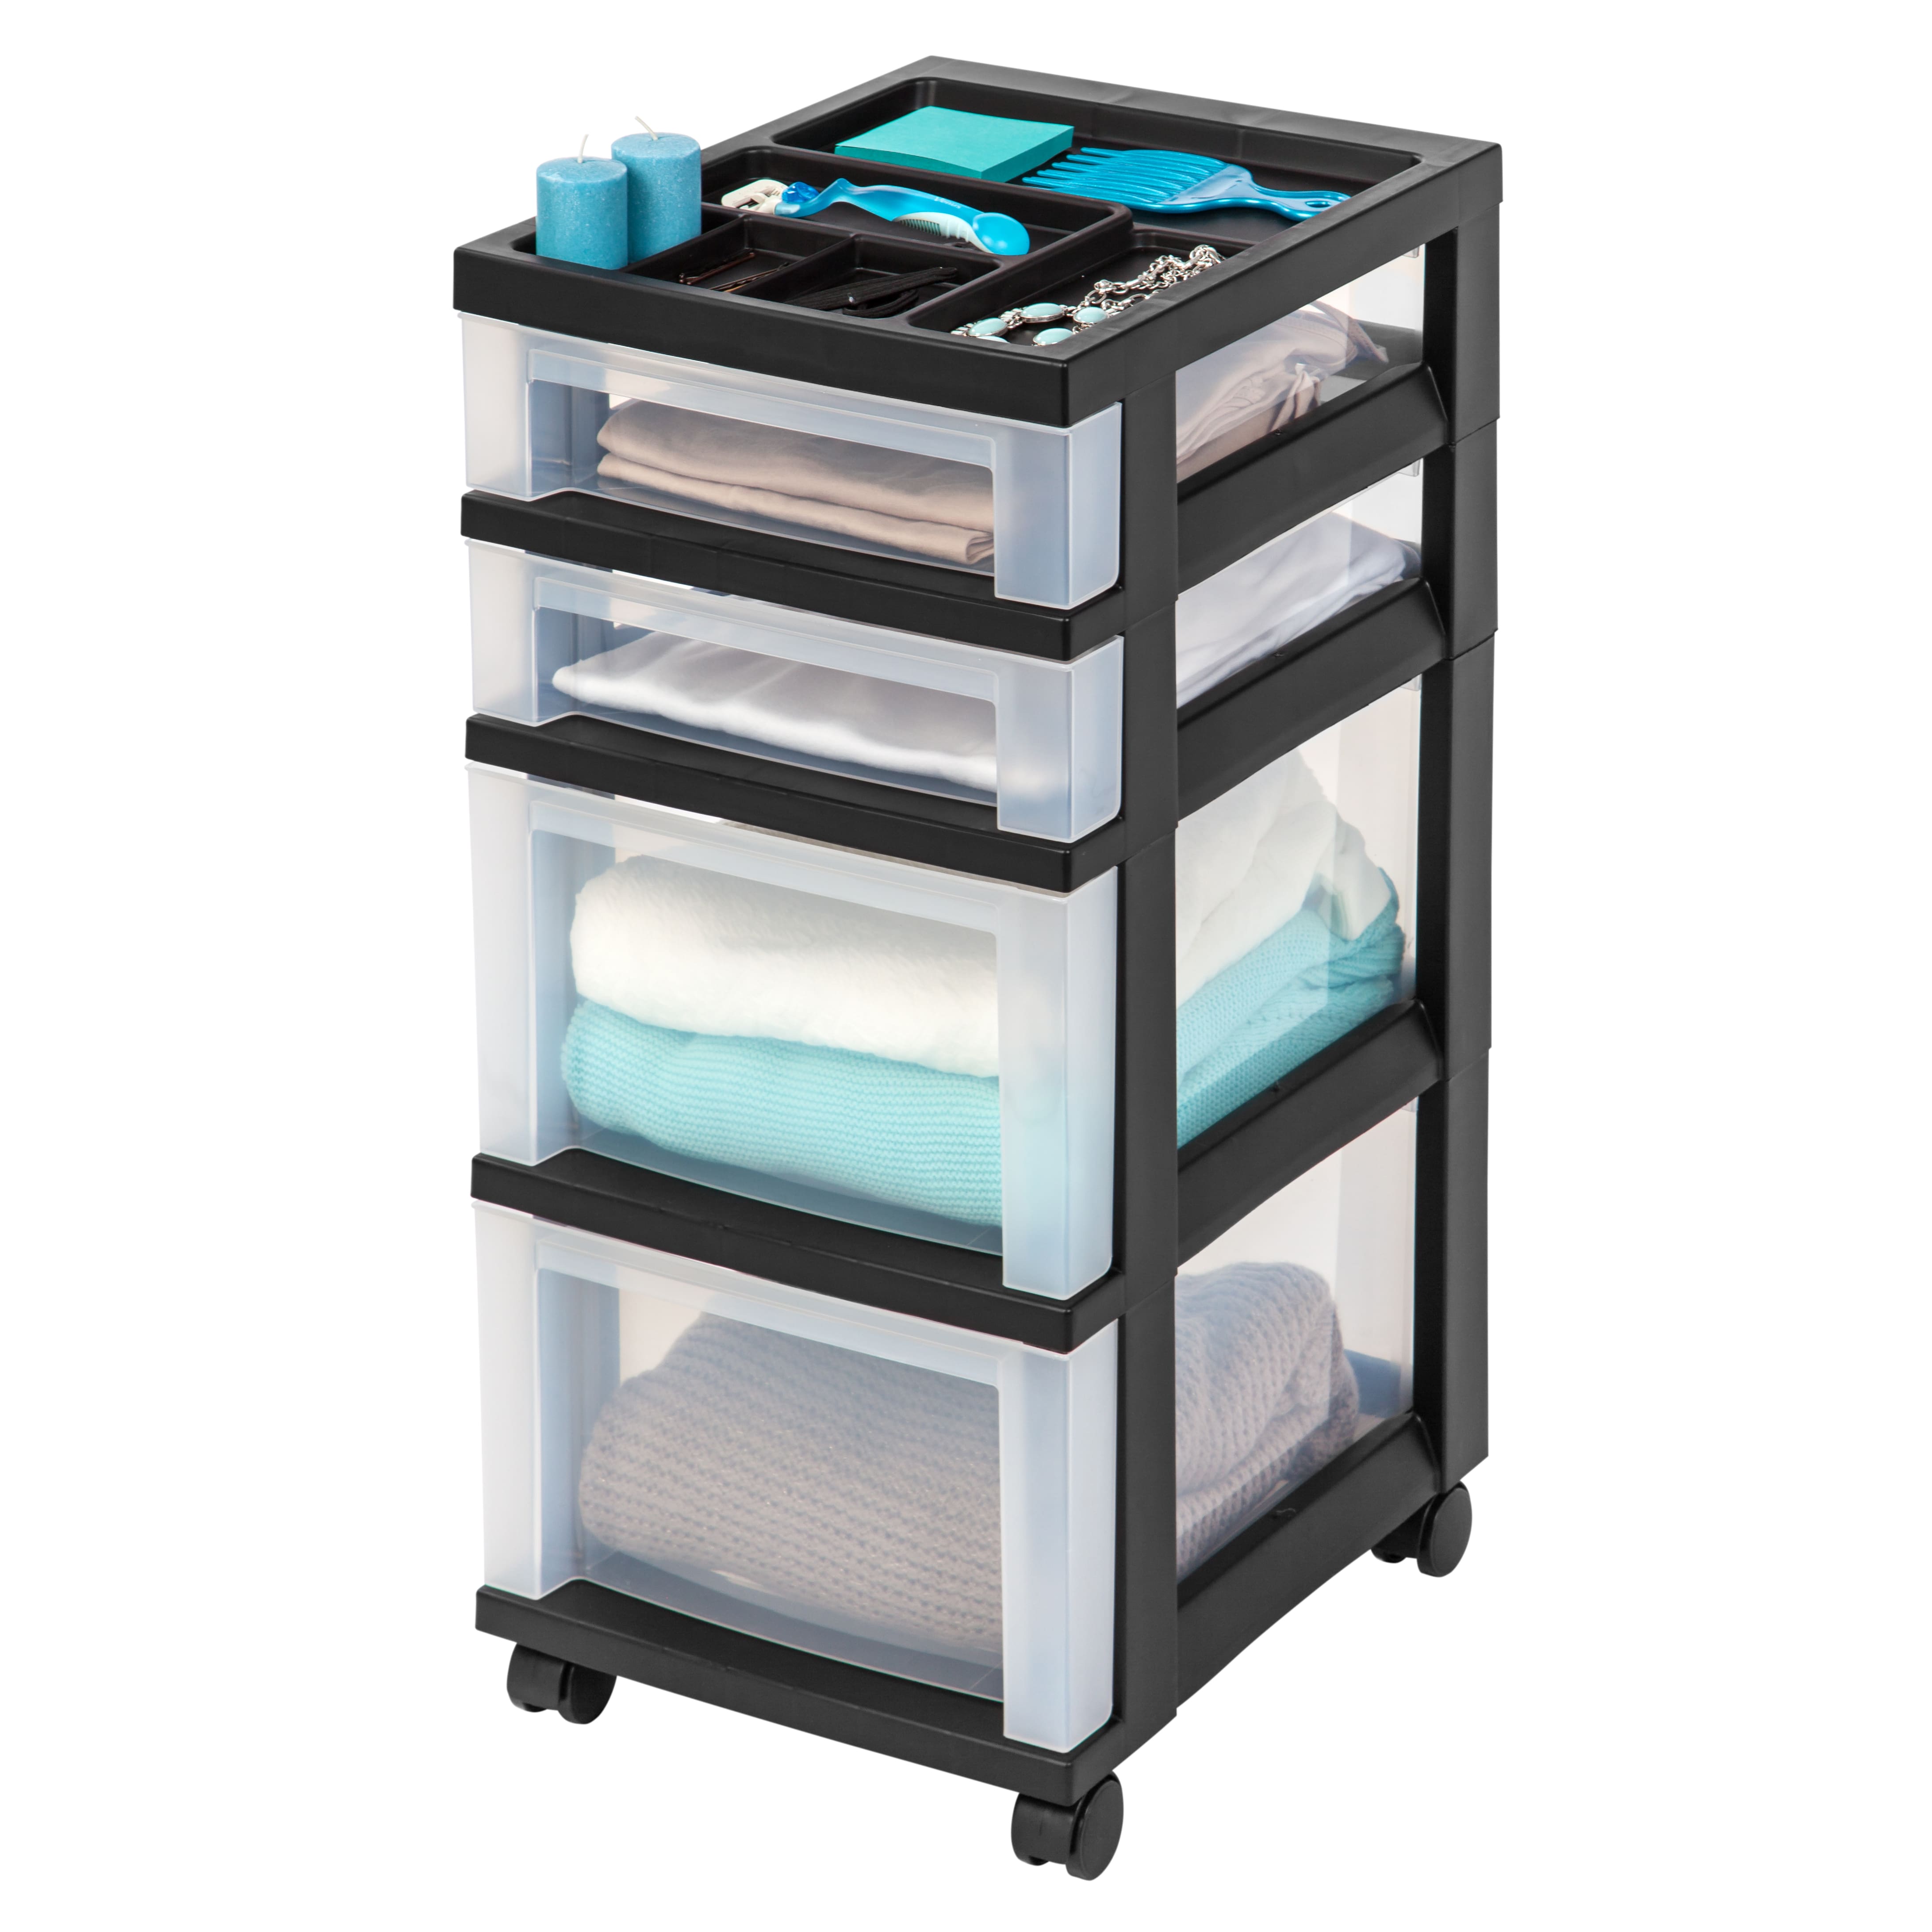 Buy the Iris® 4Drawer Storage Cart with Organizer Top at Michaels